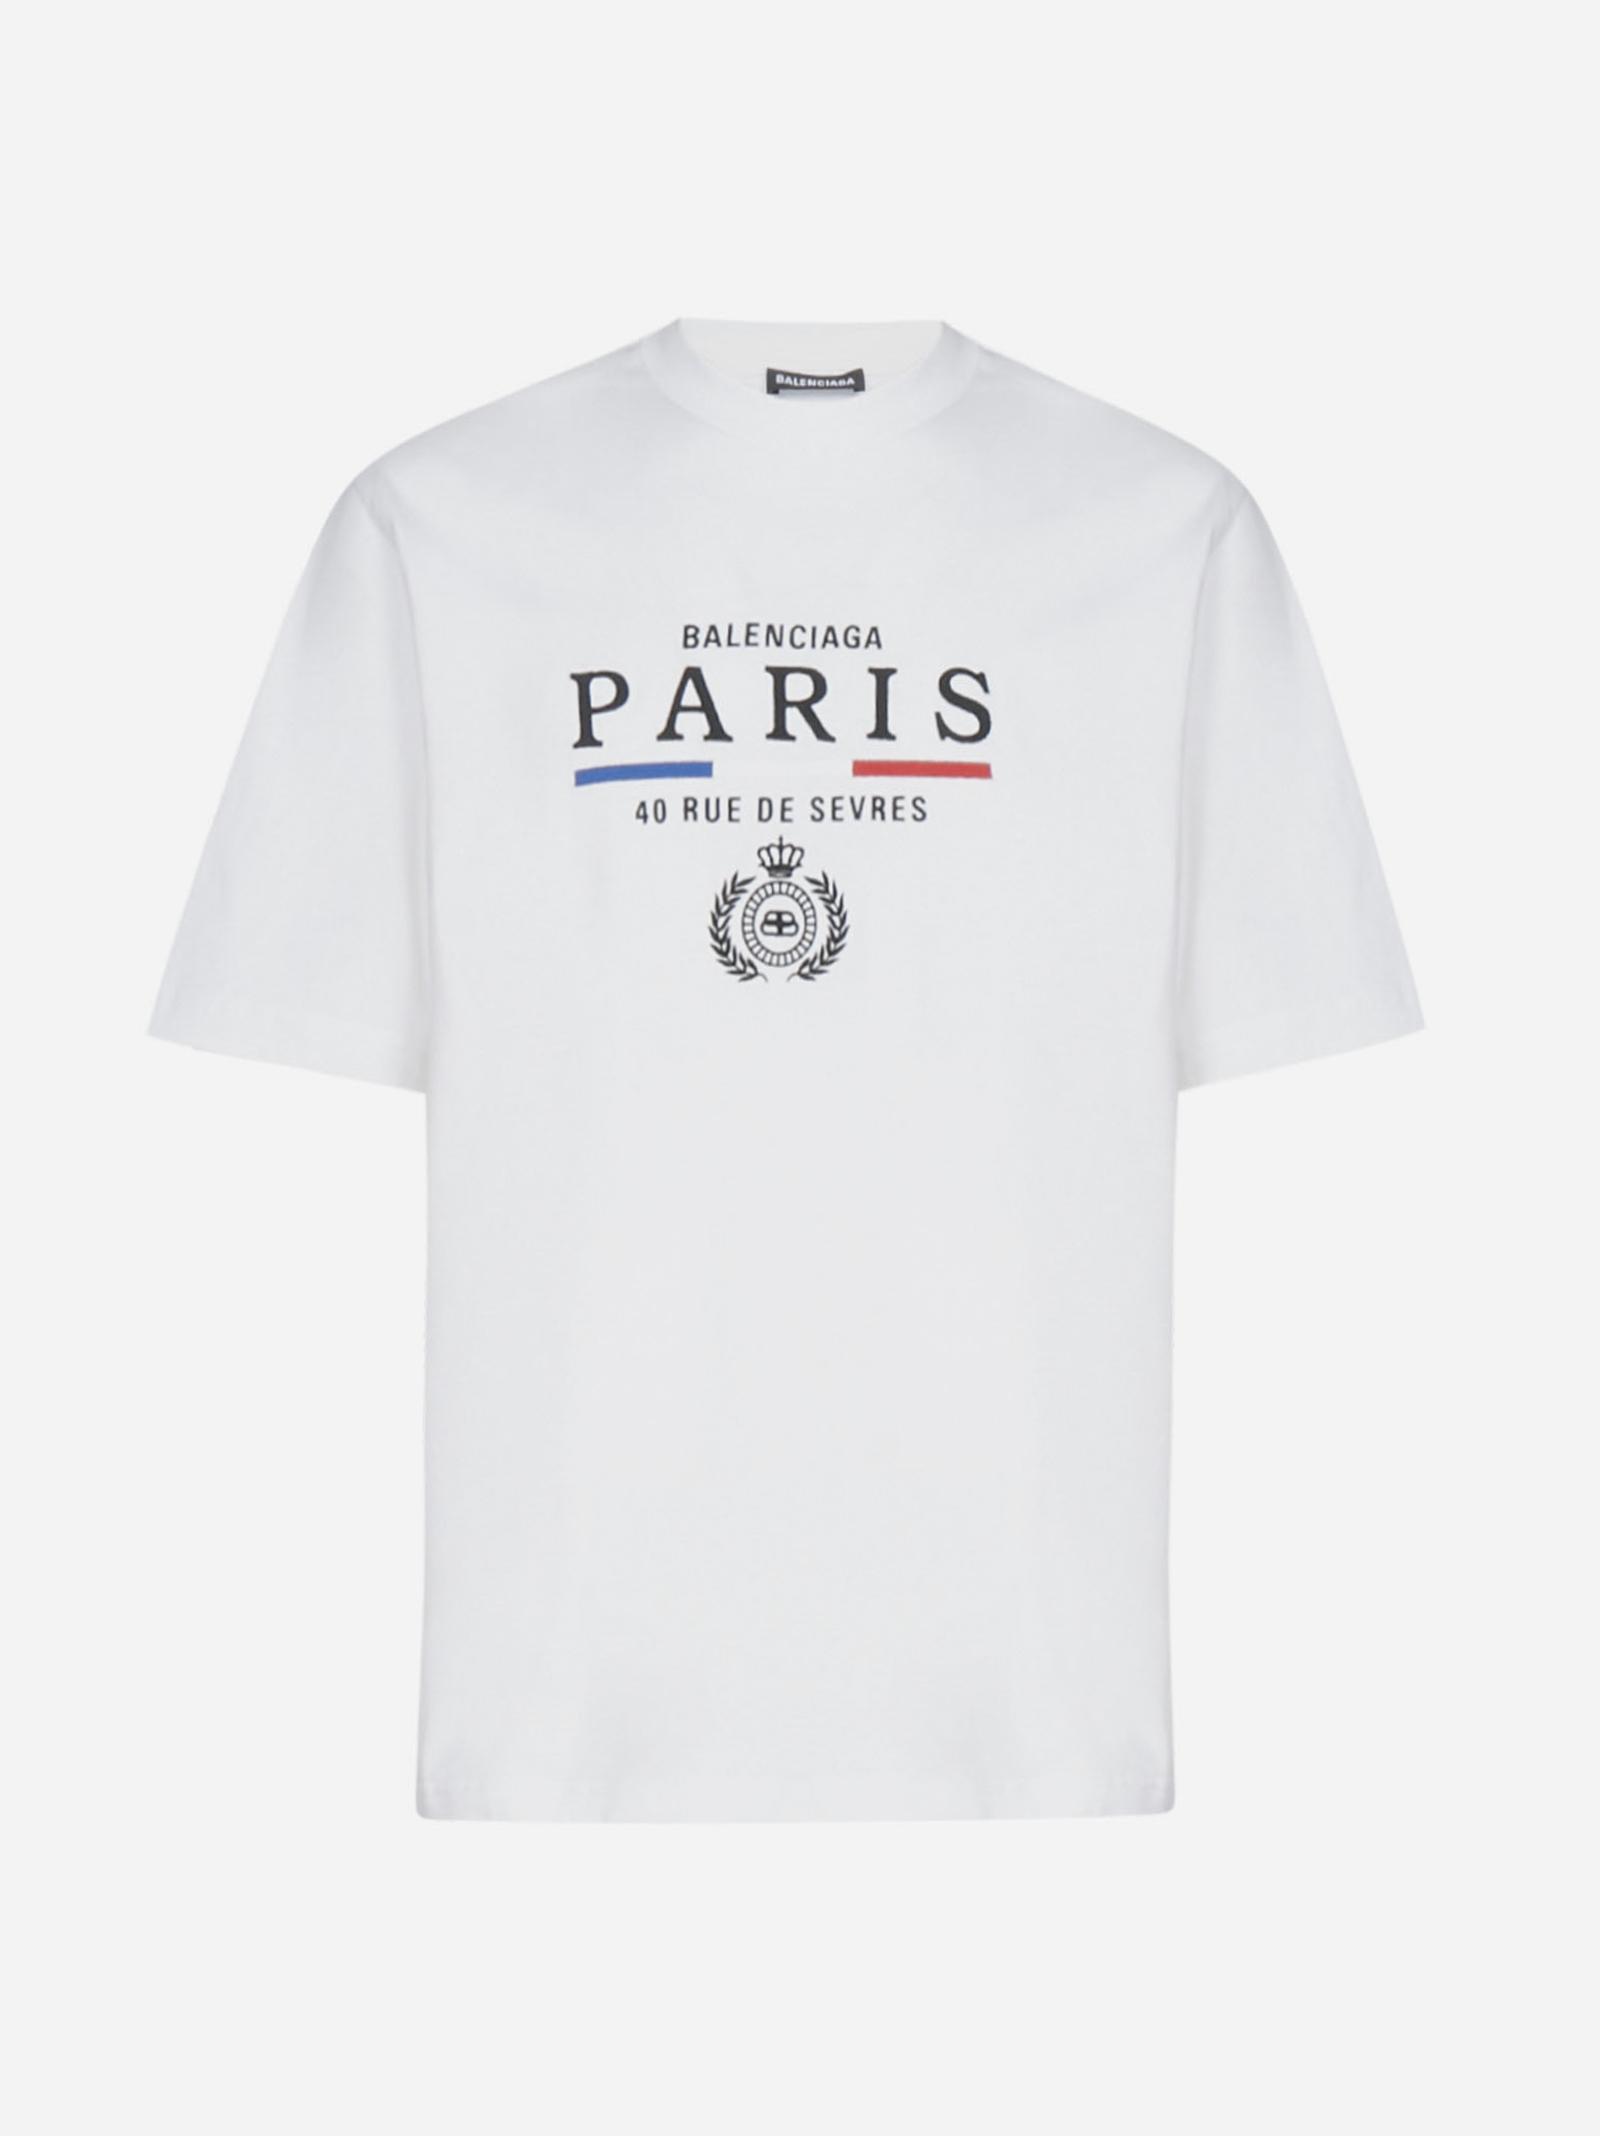 Balenciaga Paris Flag Logo Cotton T-shirt in White for Men - Lyst